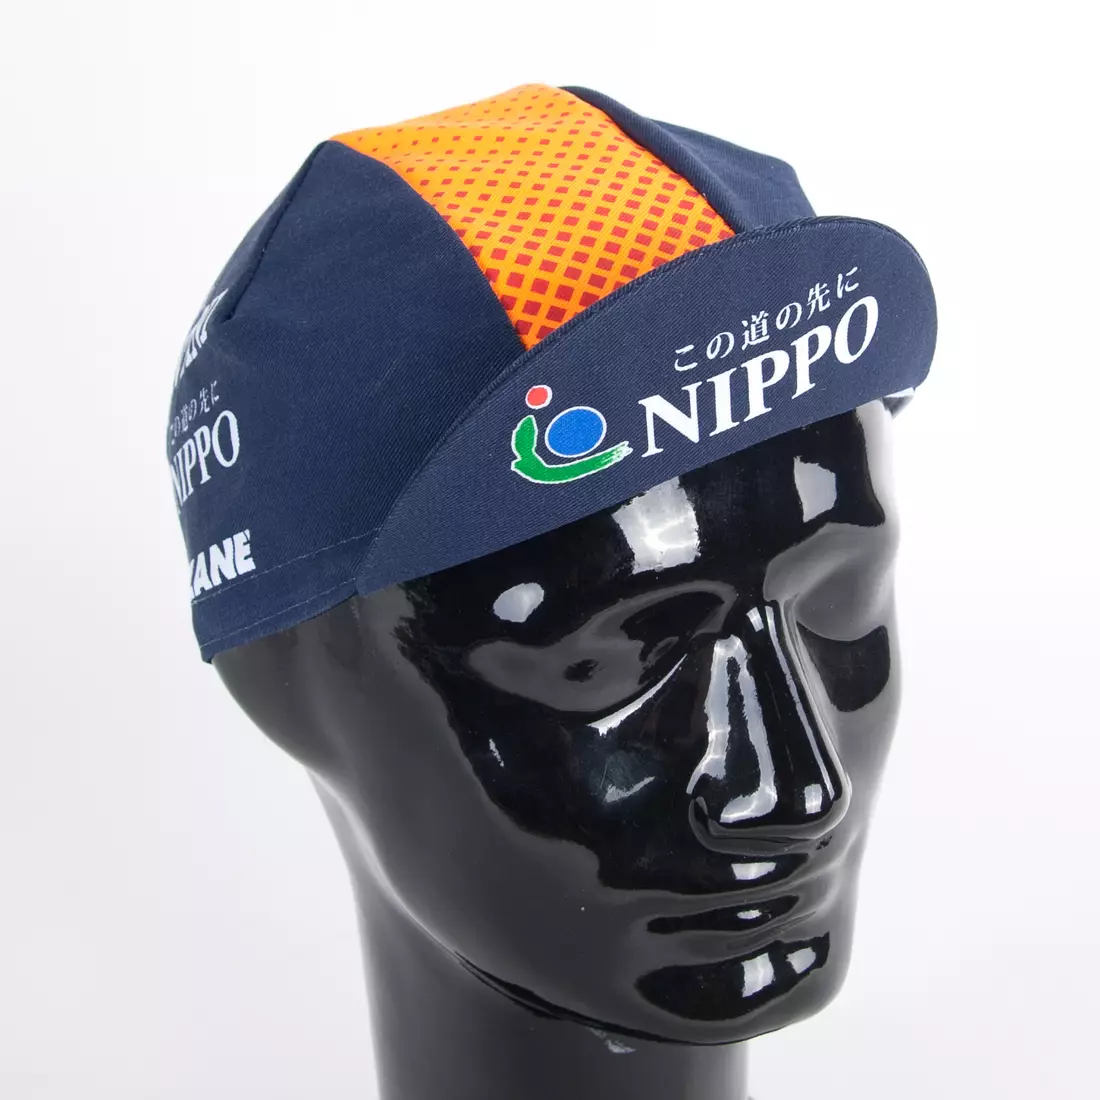 Apis Profi cycling cap VINI FANTINI Nippo Faizane navy blue and orange